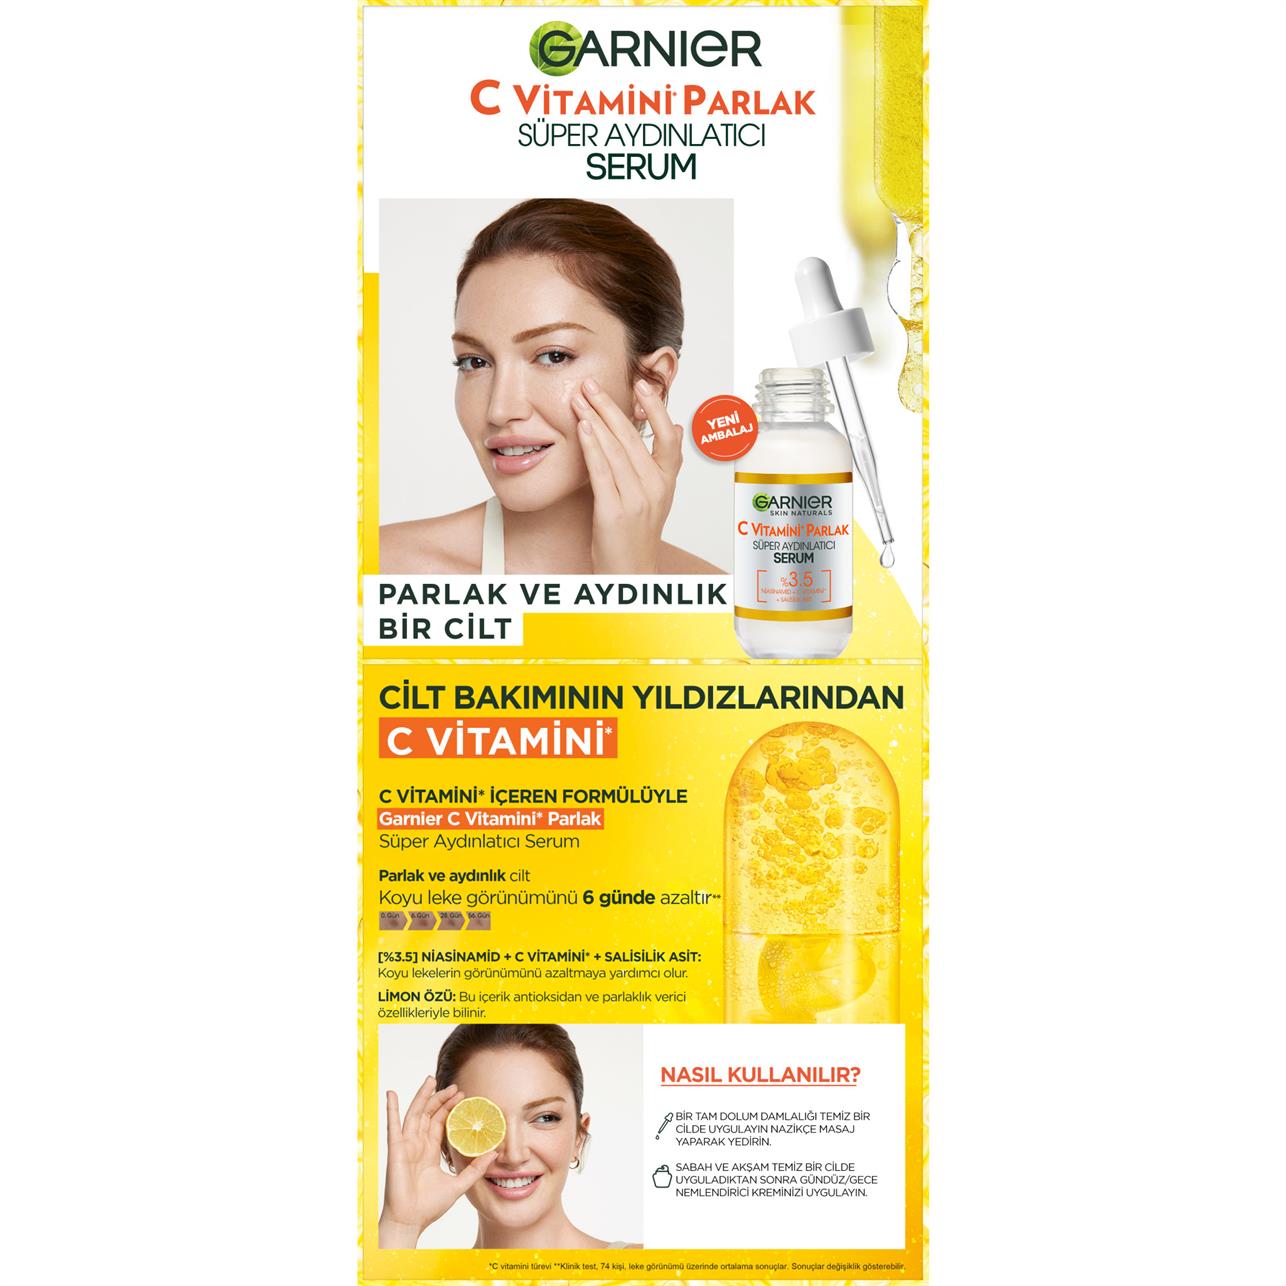 Garnier C Vitamini Parlak Süper Aydınlatıcı Serum 30ml - Platin